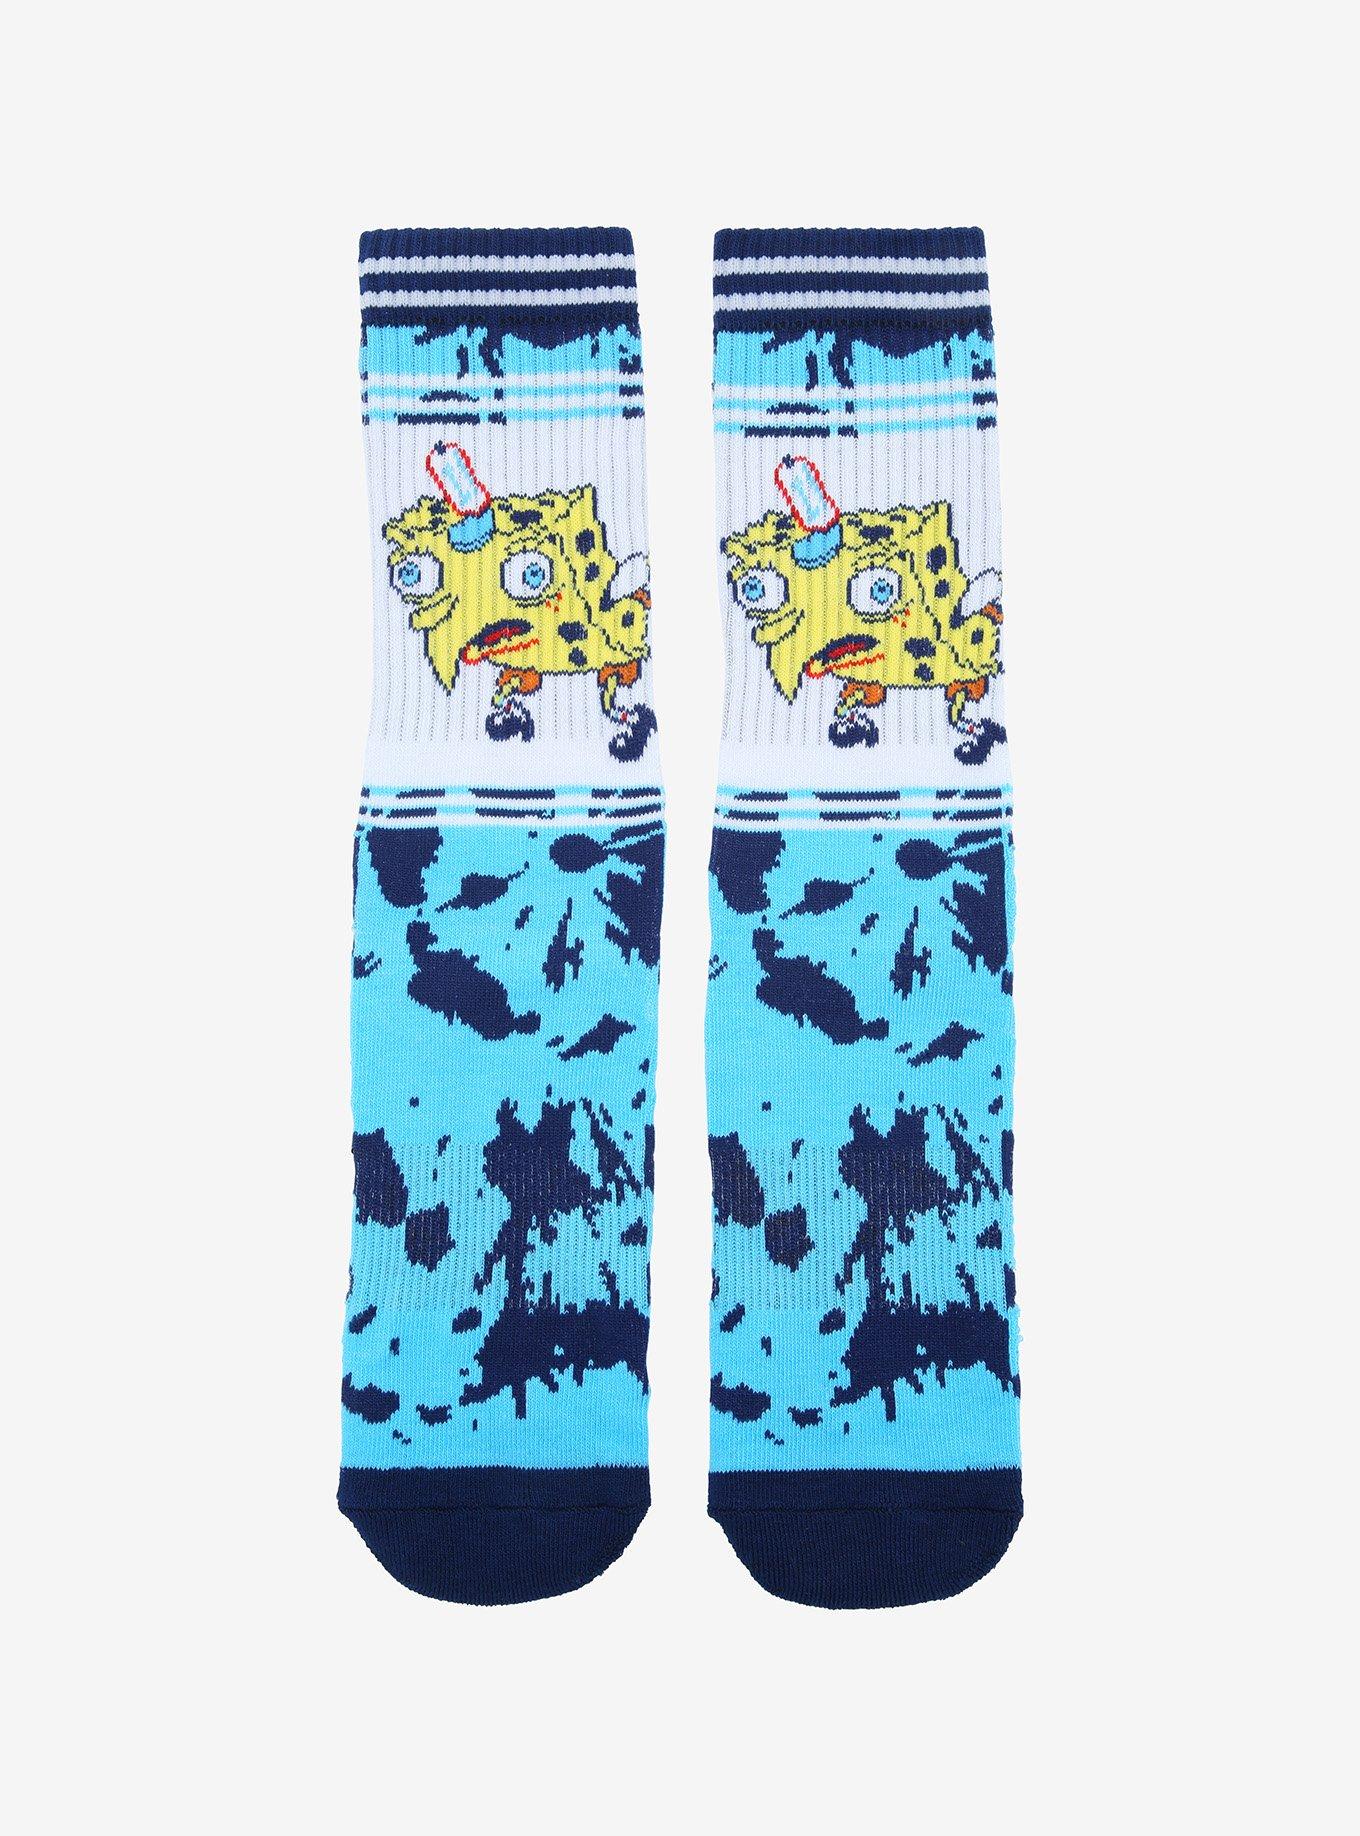 SpongeBob SquarePants Chicken Meme Tie-Dye Crew Socks | Hot Topic